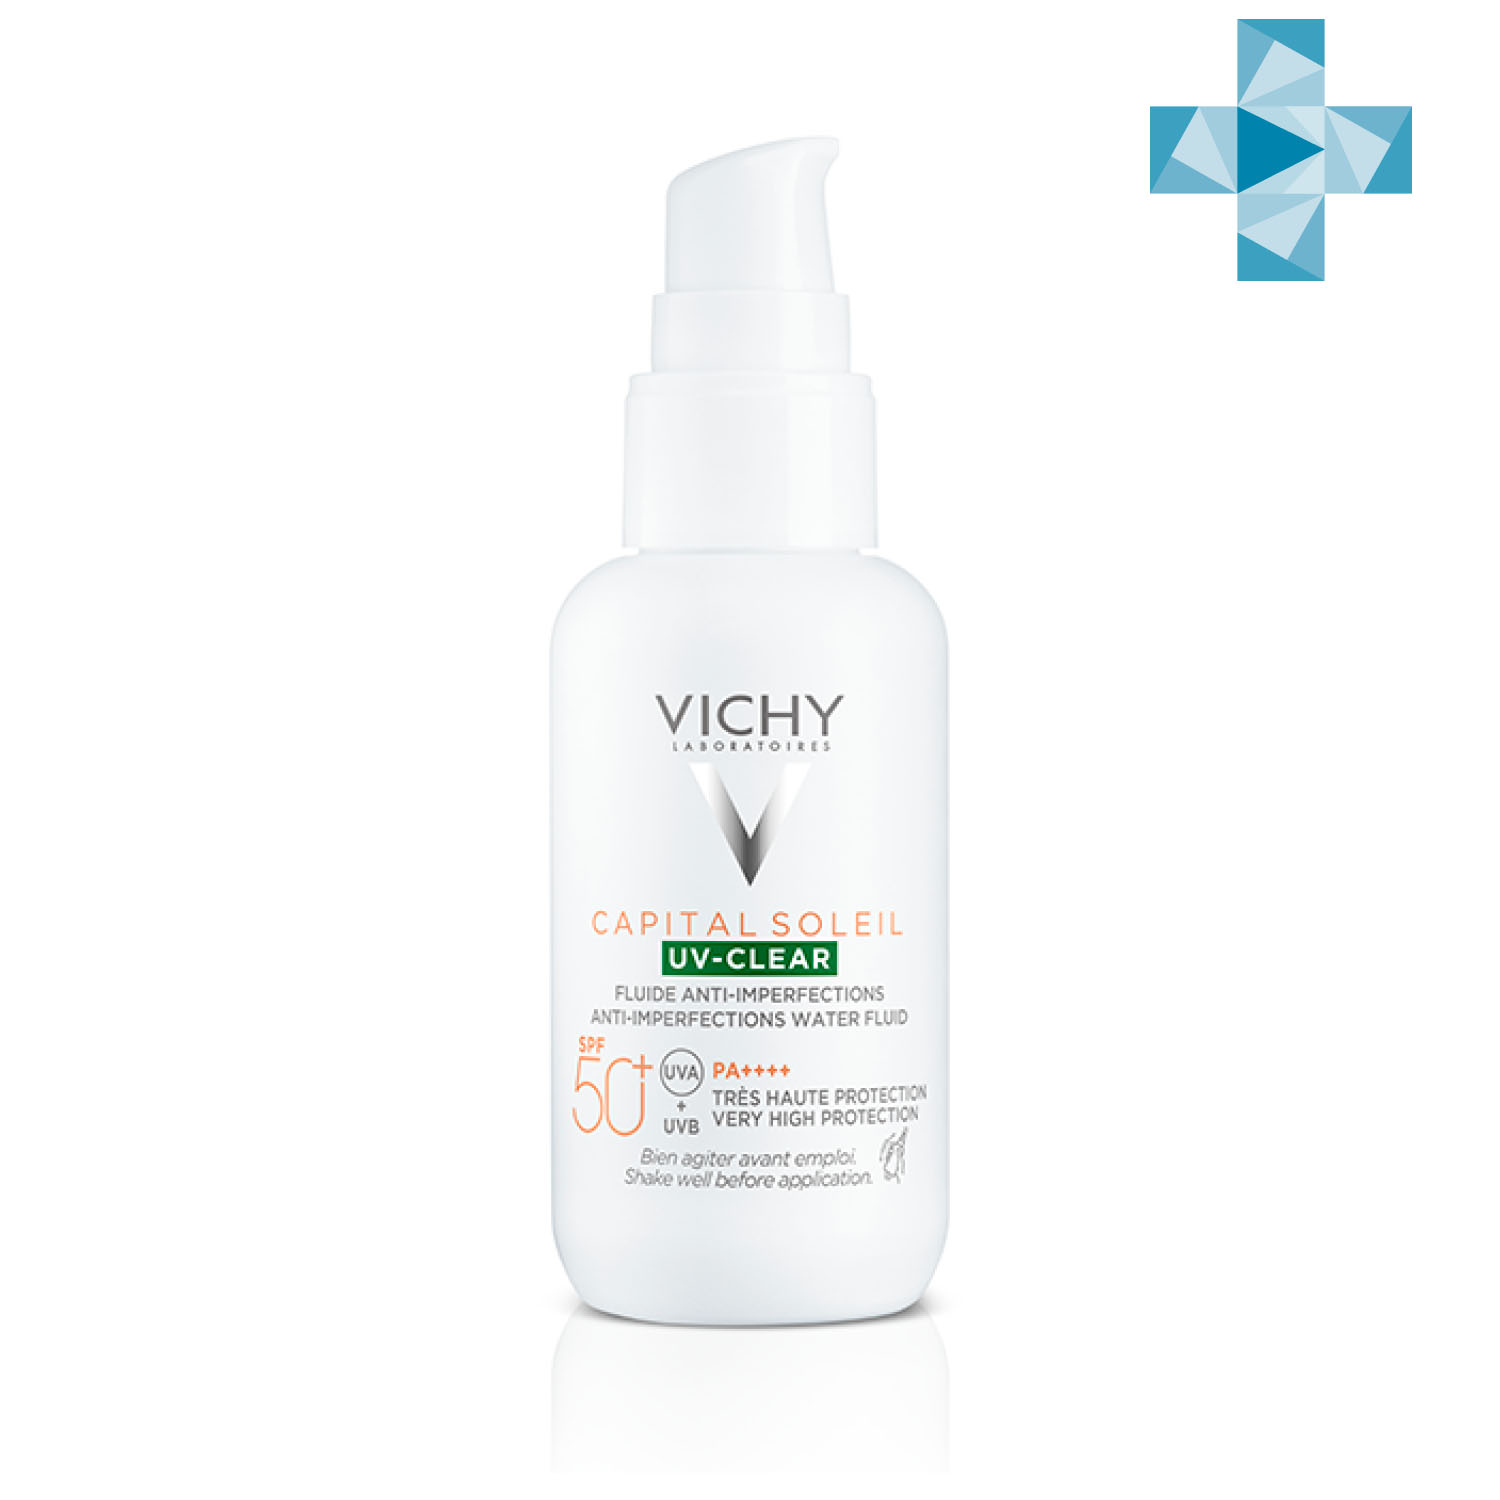 Vichy Невесомый солнцезащитный флюид UV-Clear для лица против несовершенств SPF 50+, 40 мл (Vichy, Capital Soleil)